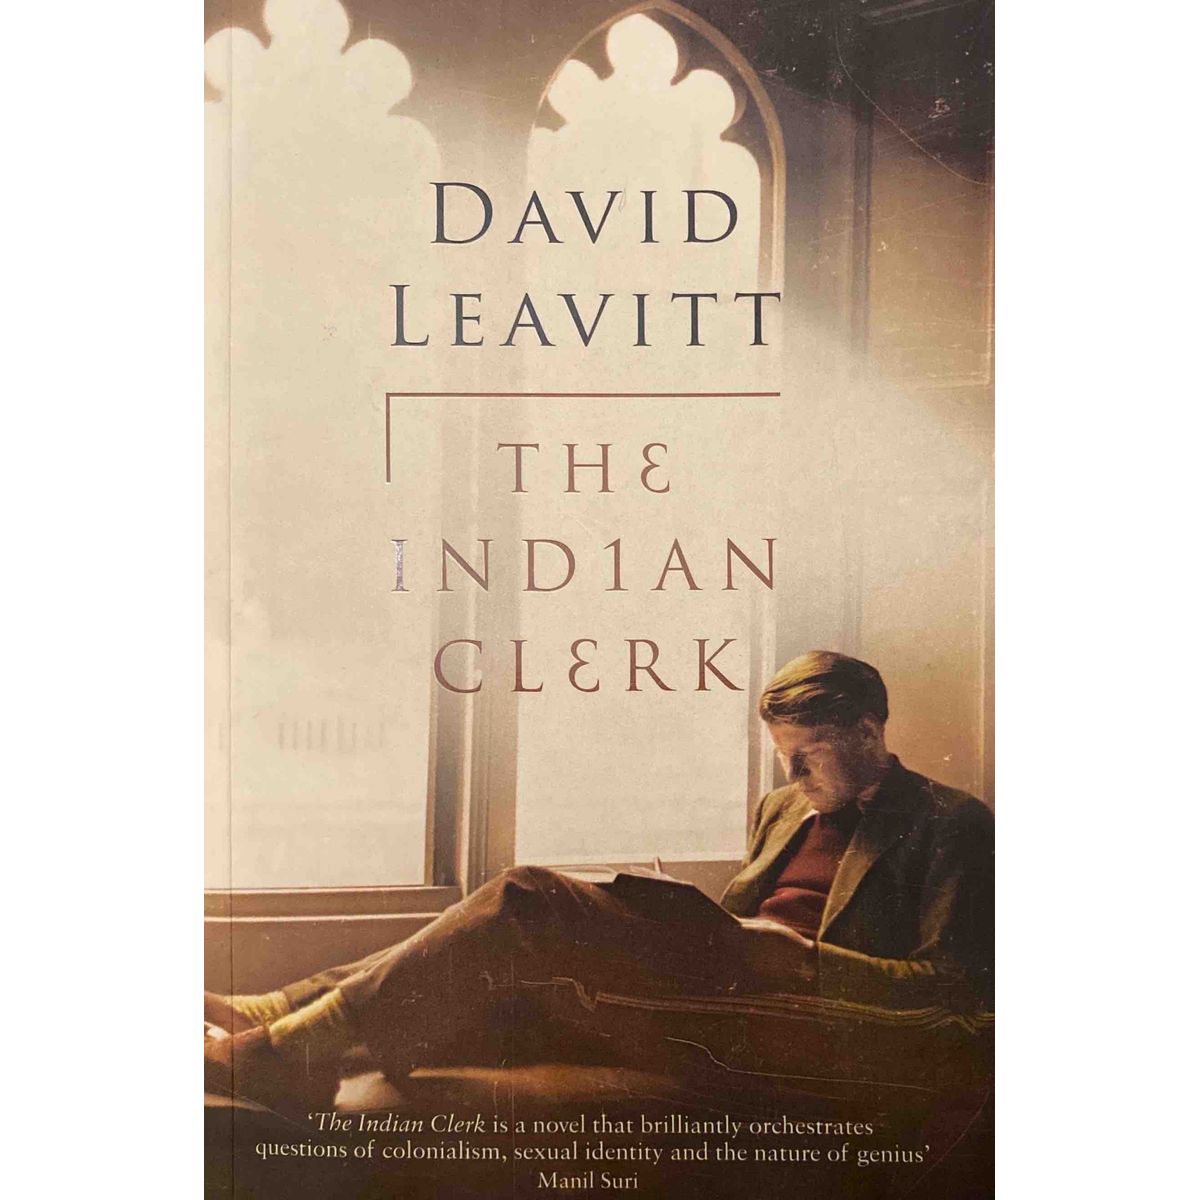 ISBN: 9780747593706 / 0747593701 - The Indian Clerk by David Leavitt [2007]